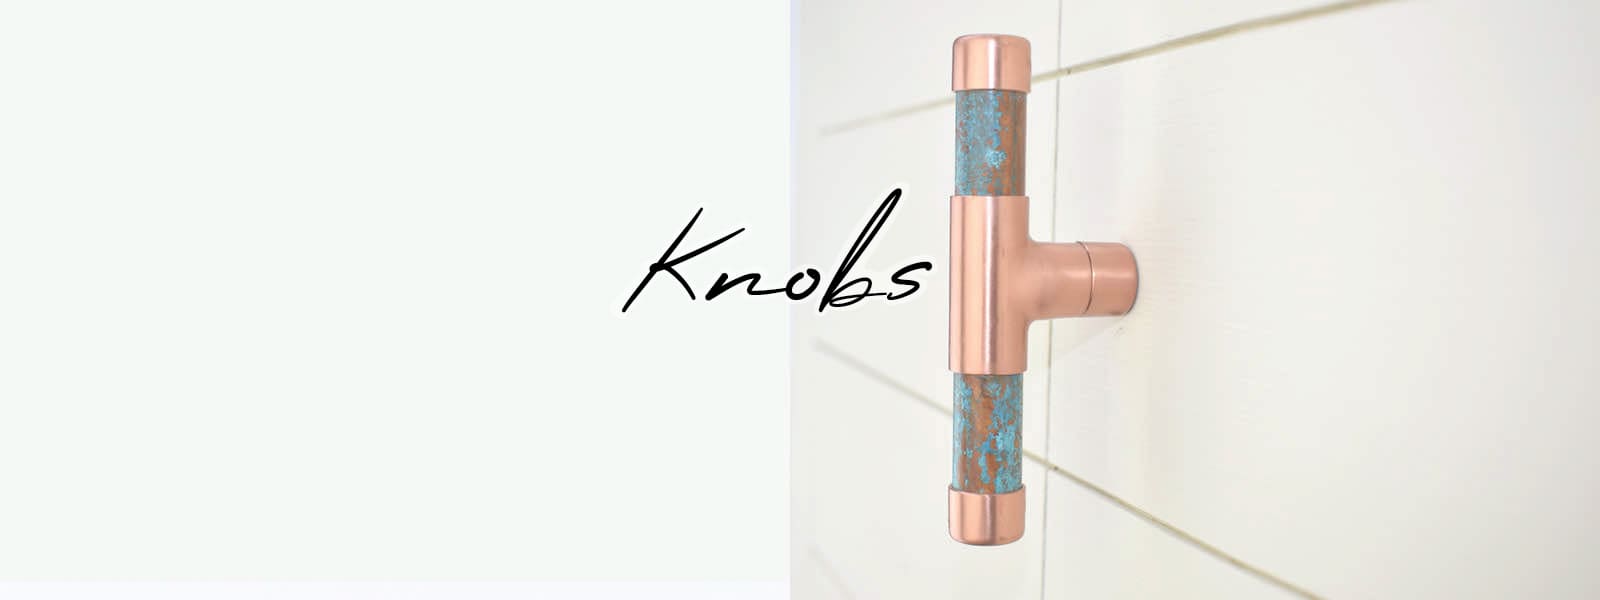 Kitchen cabinet knob collection by Proper Copper Design